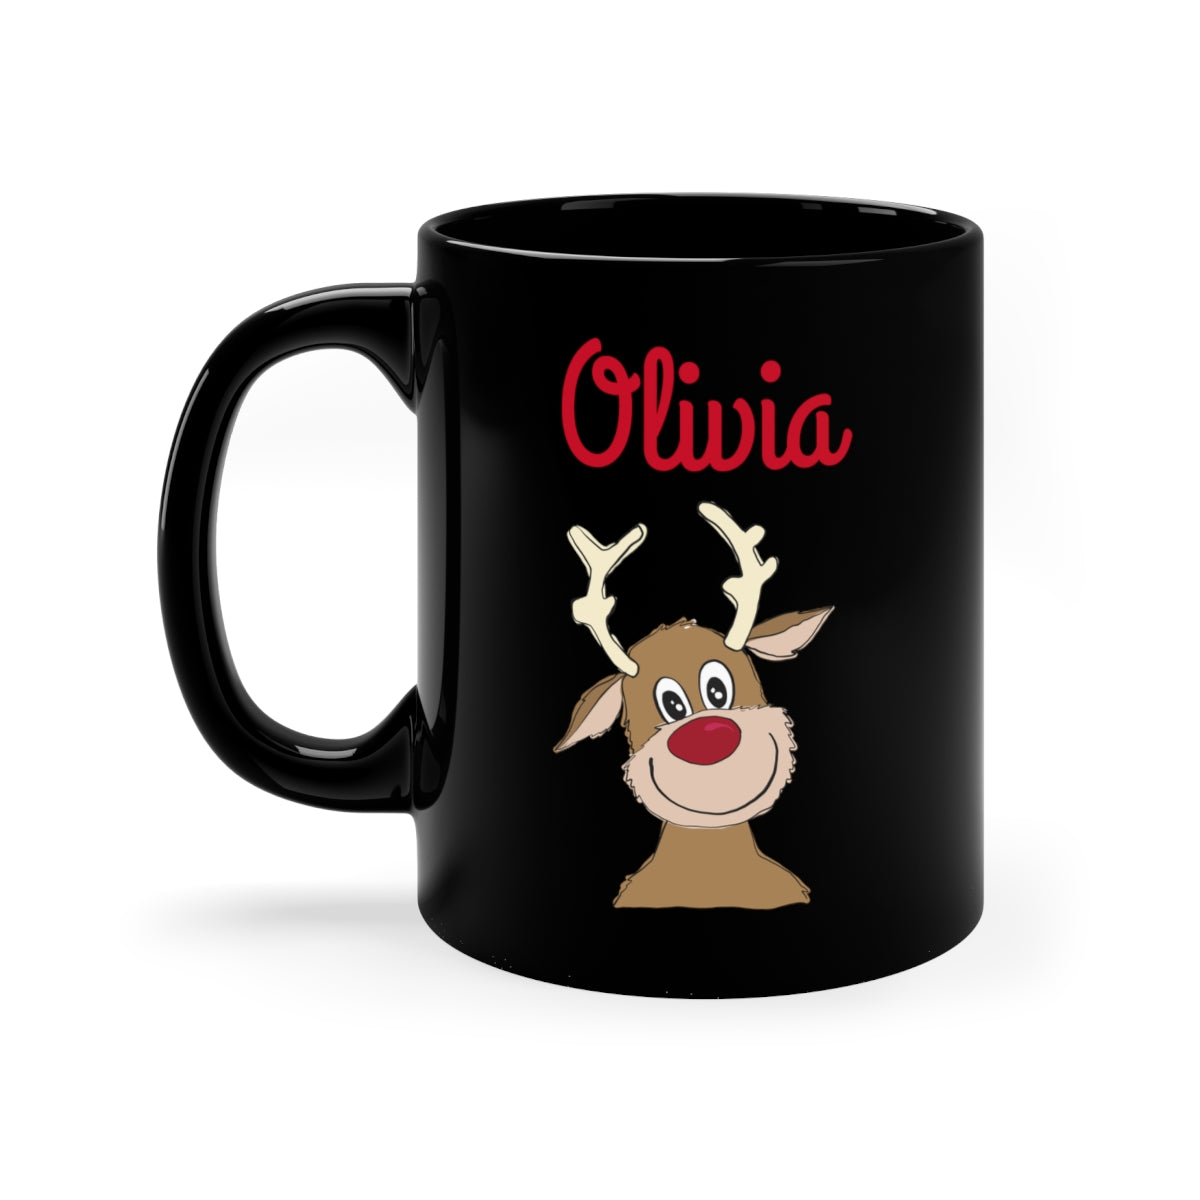 Personalized Reindeer Mug